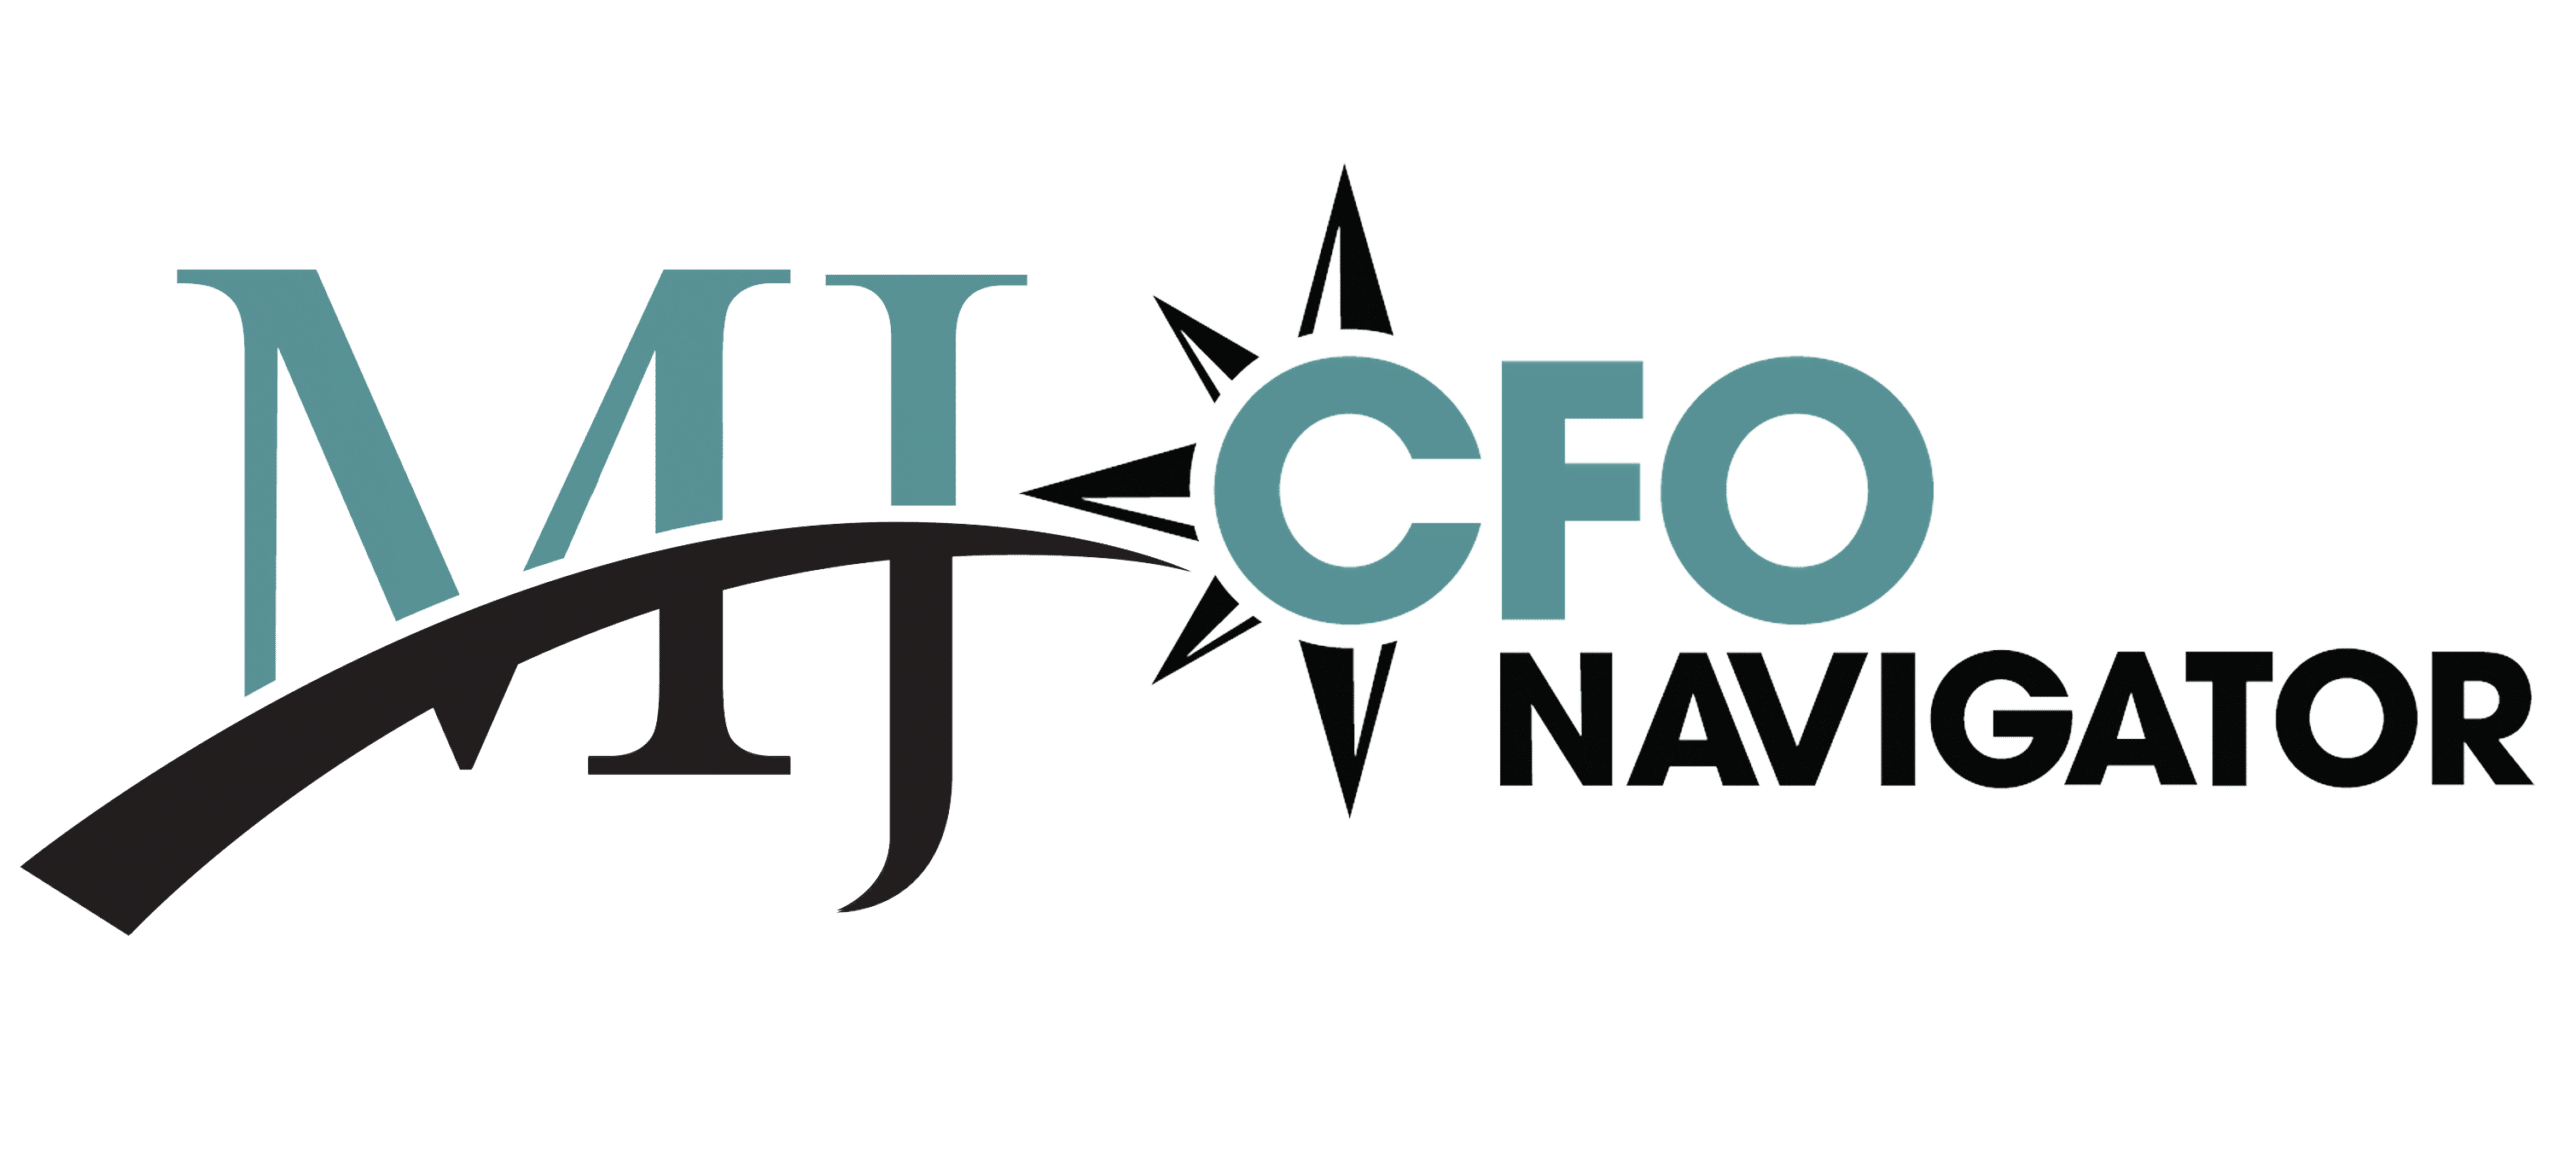 CFO Navigator-Combined-gold